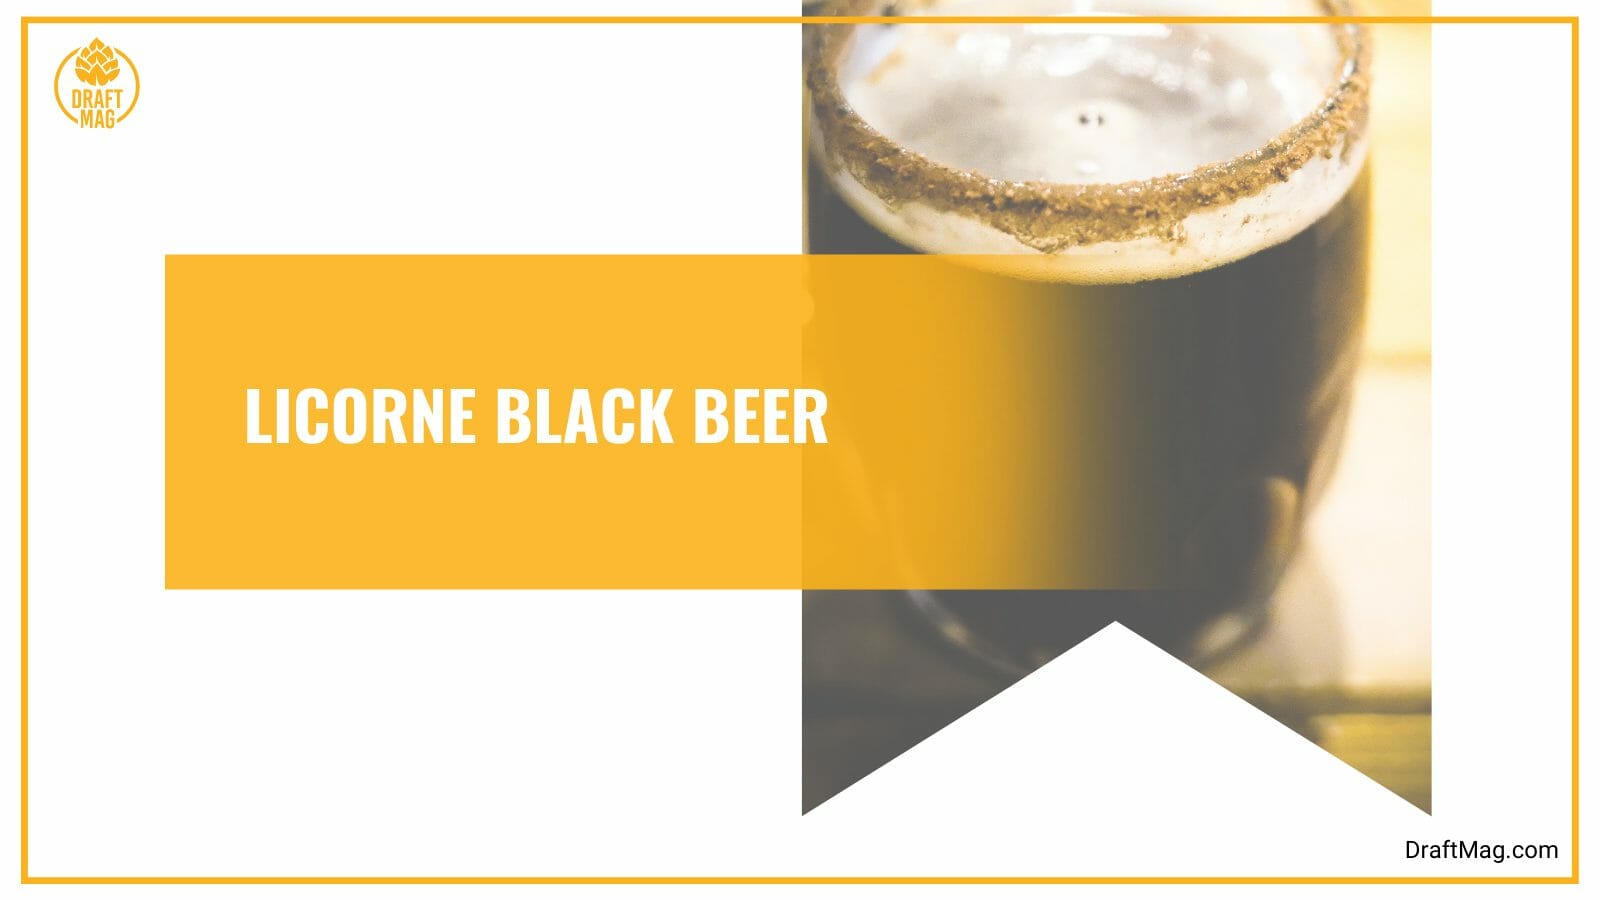 Licorne black beer